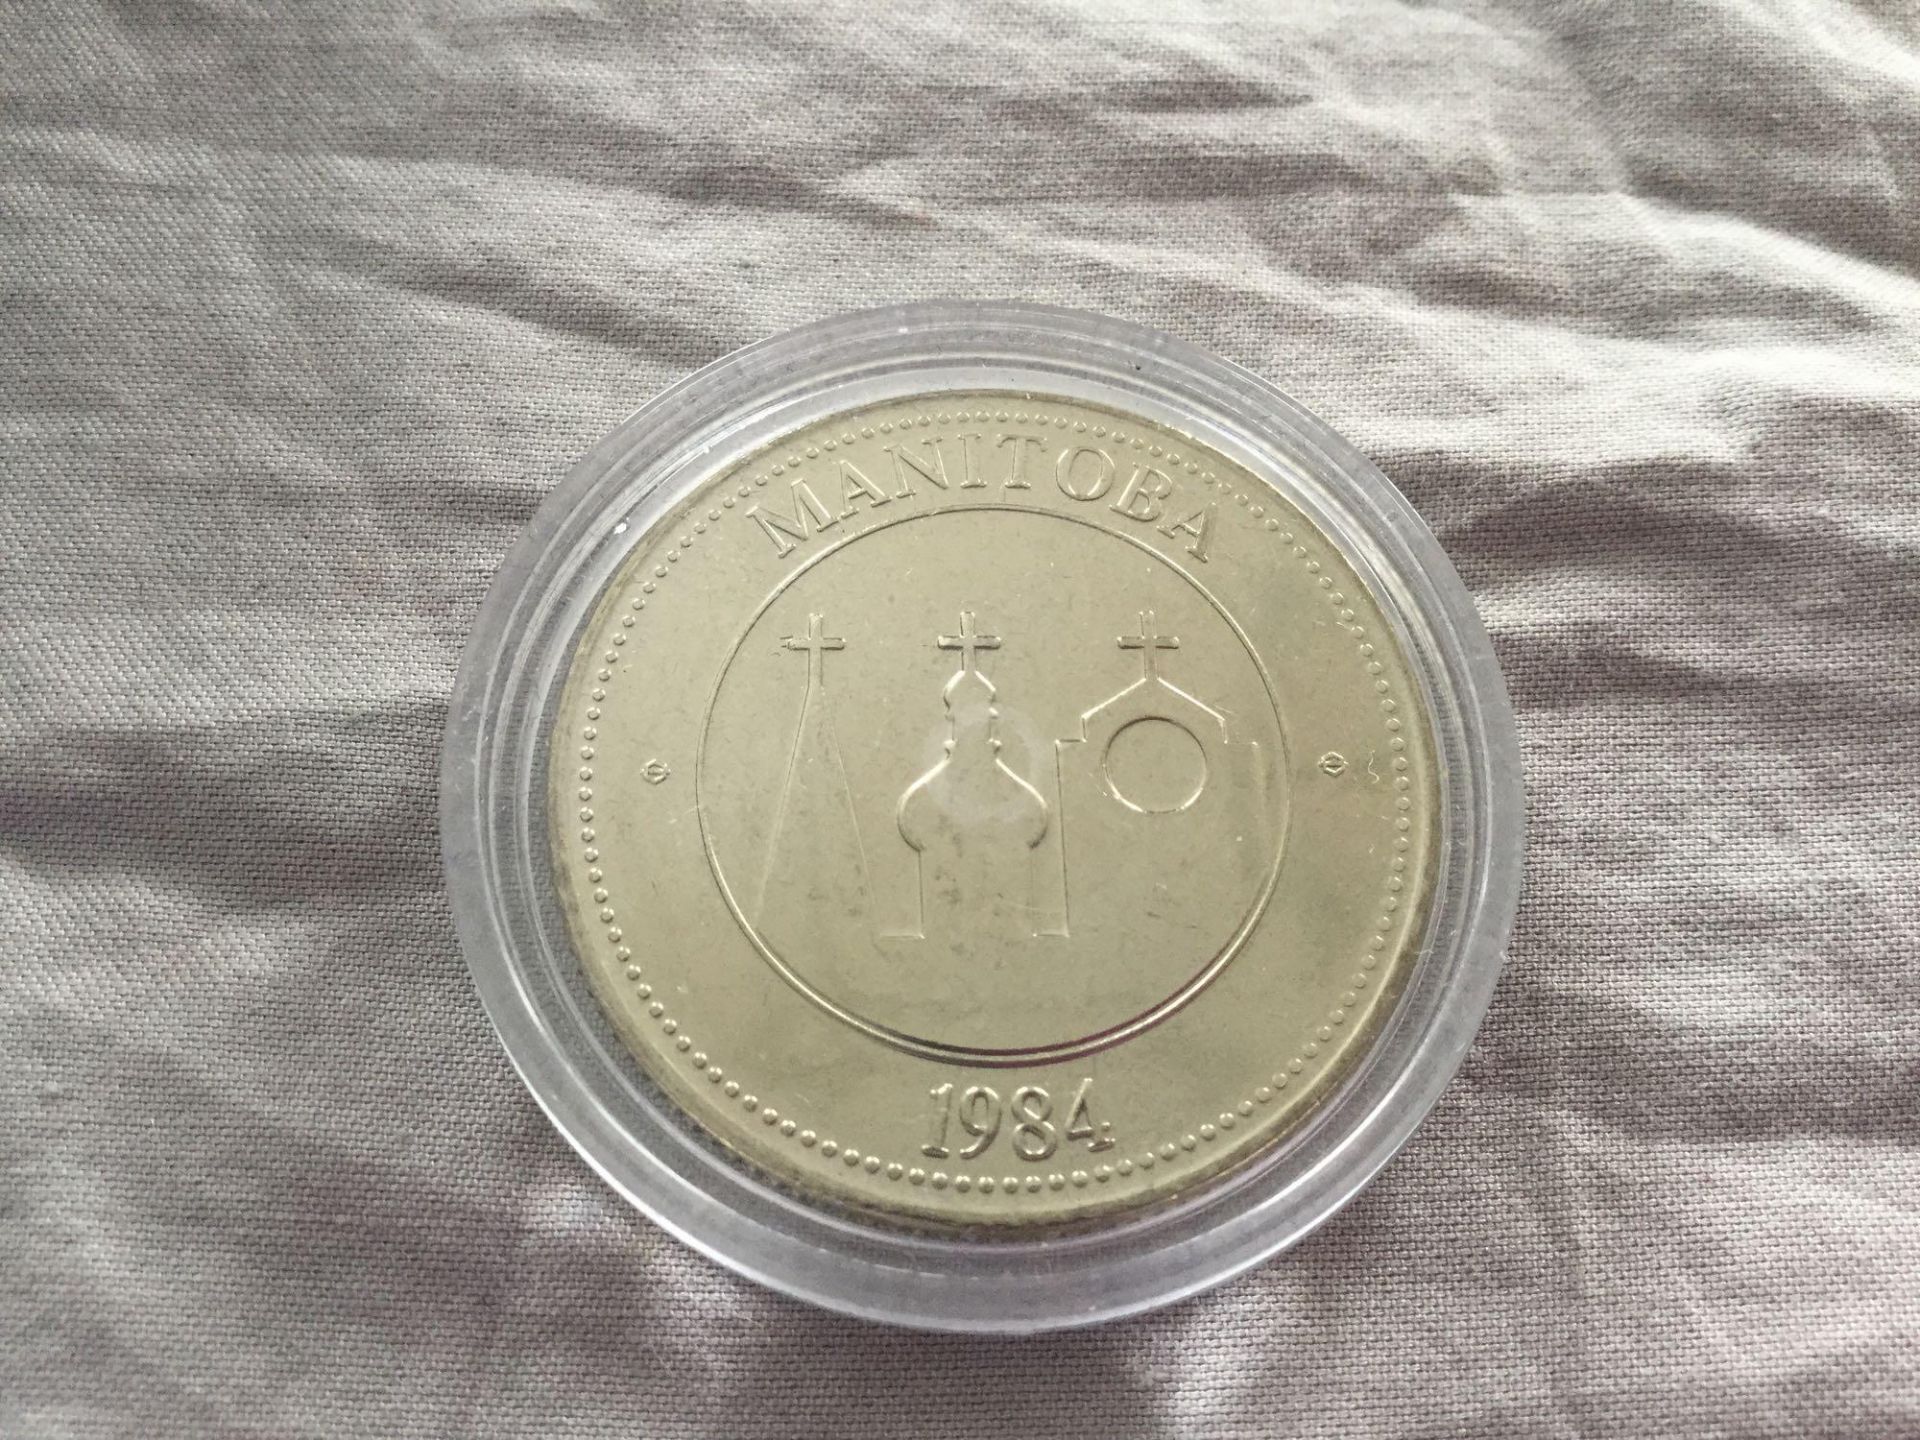 Manitoba 1984 - Joannes Pavlvs II - Commemorative Coin set - Image 3 of 4